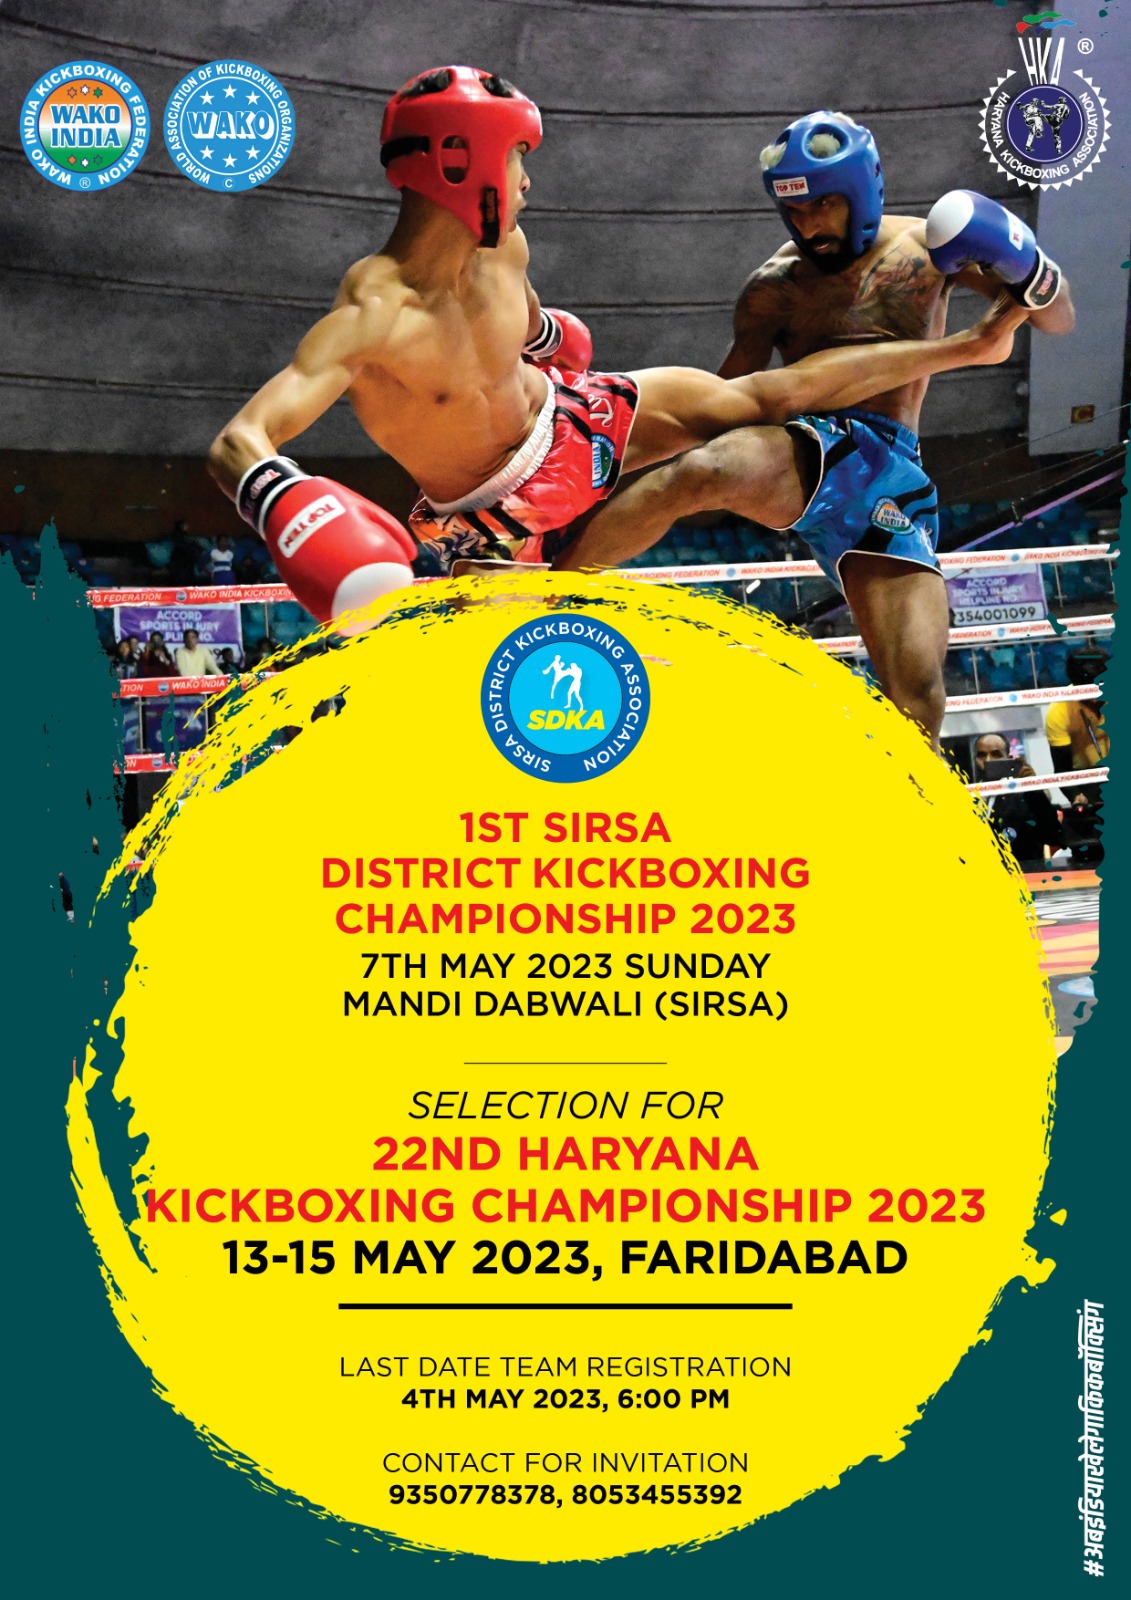 1st Sirsa District Kickboxing Championship 2023 - Wako India